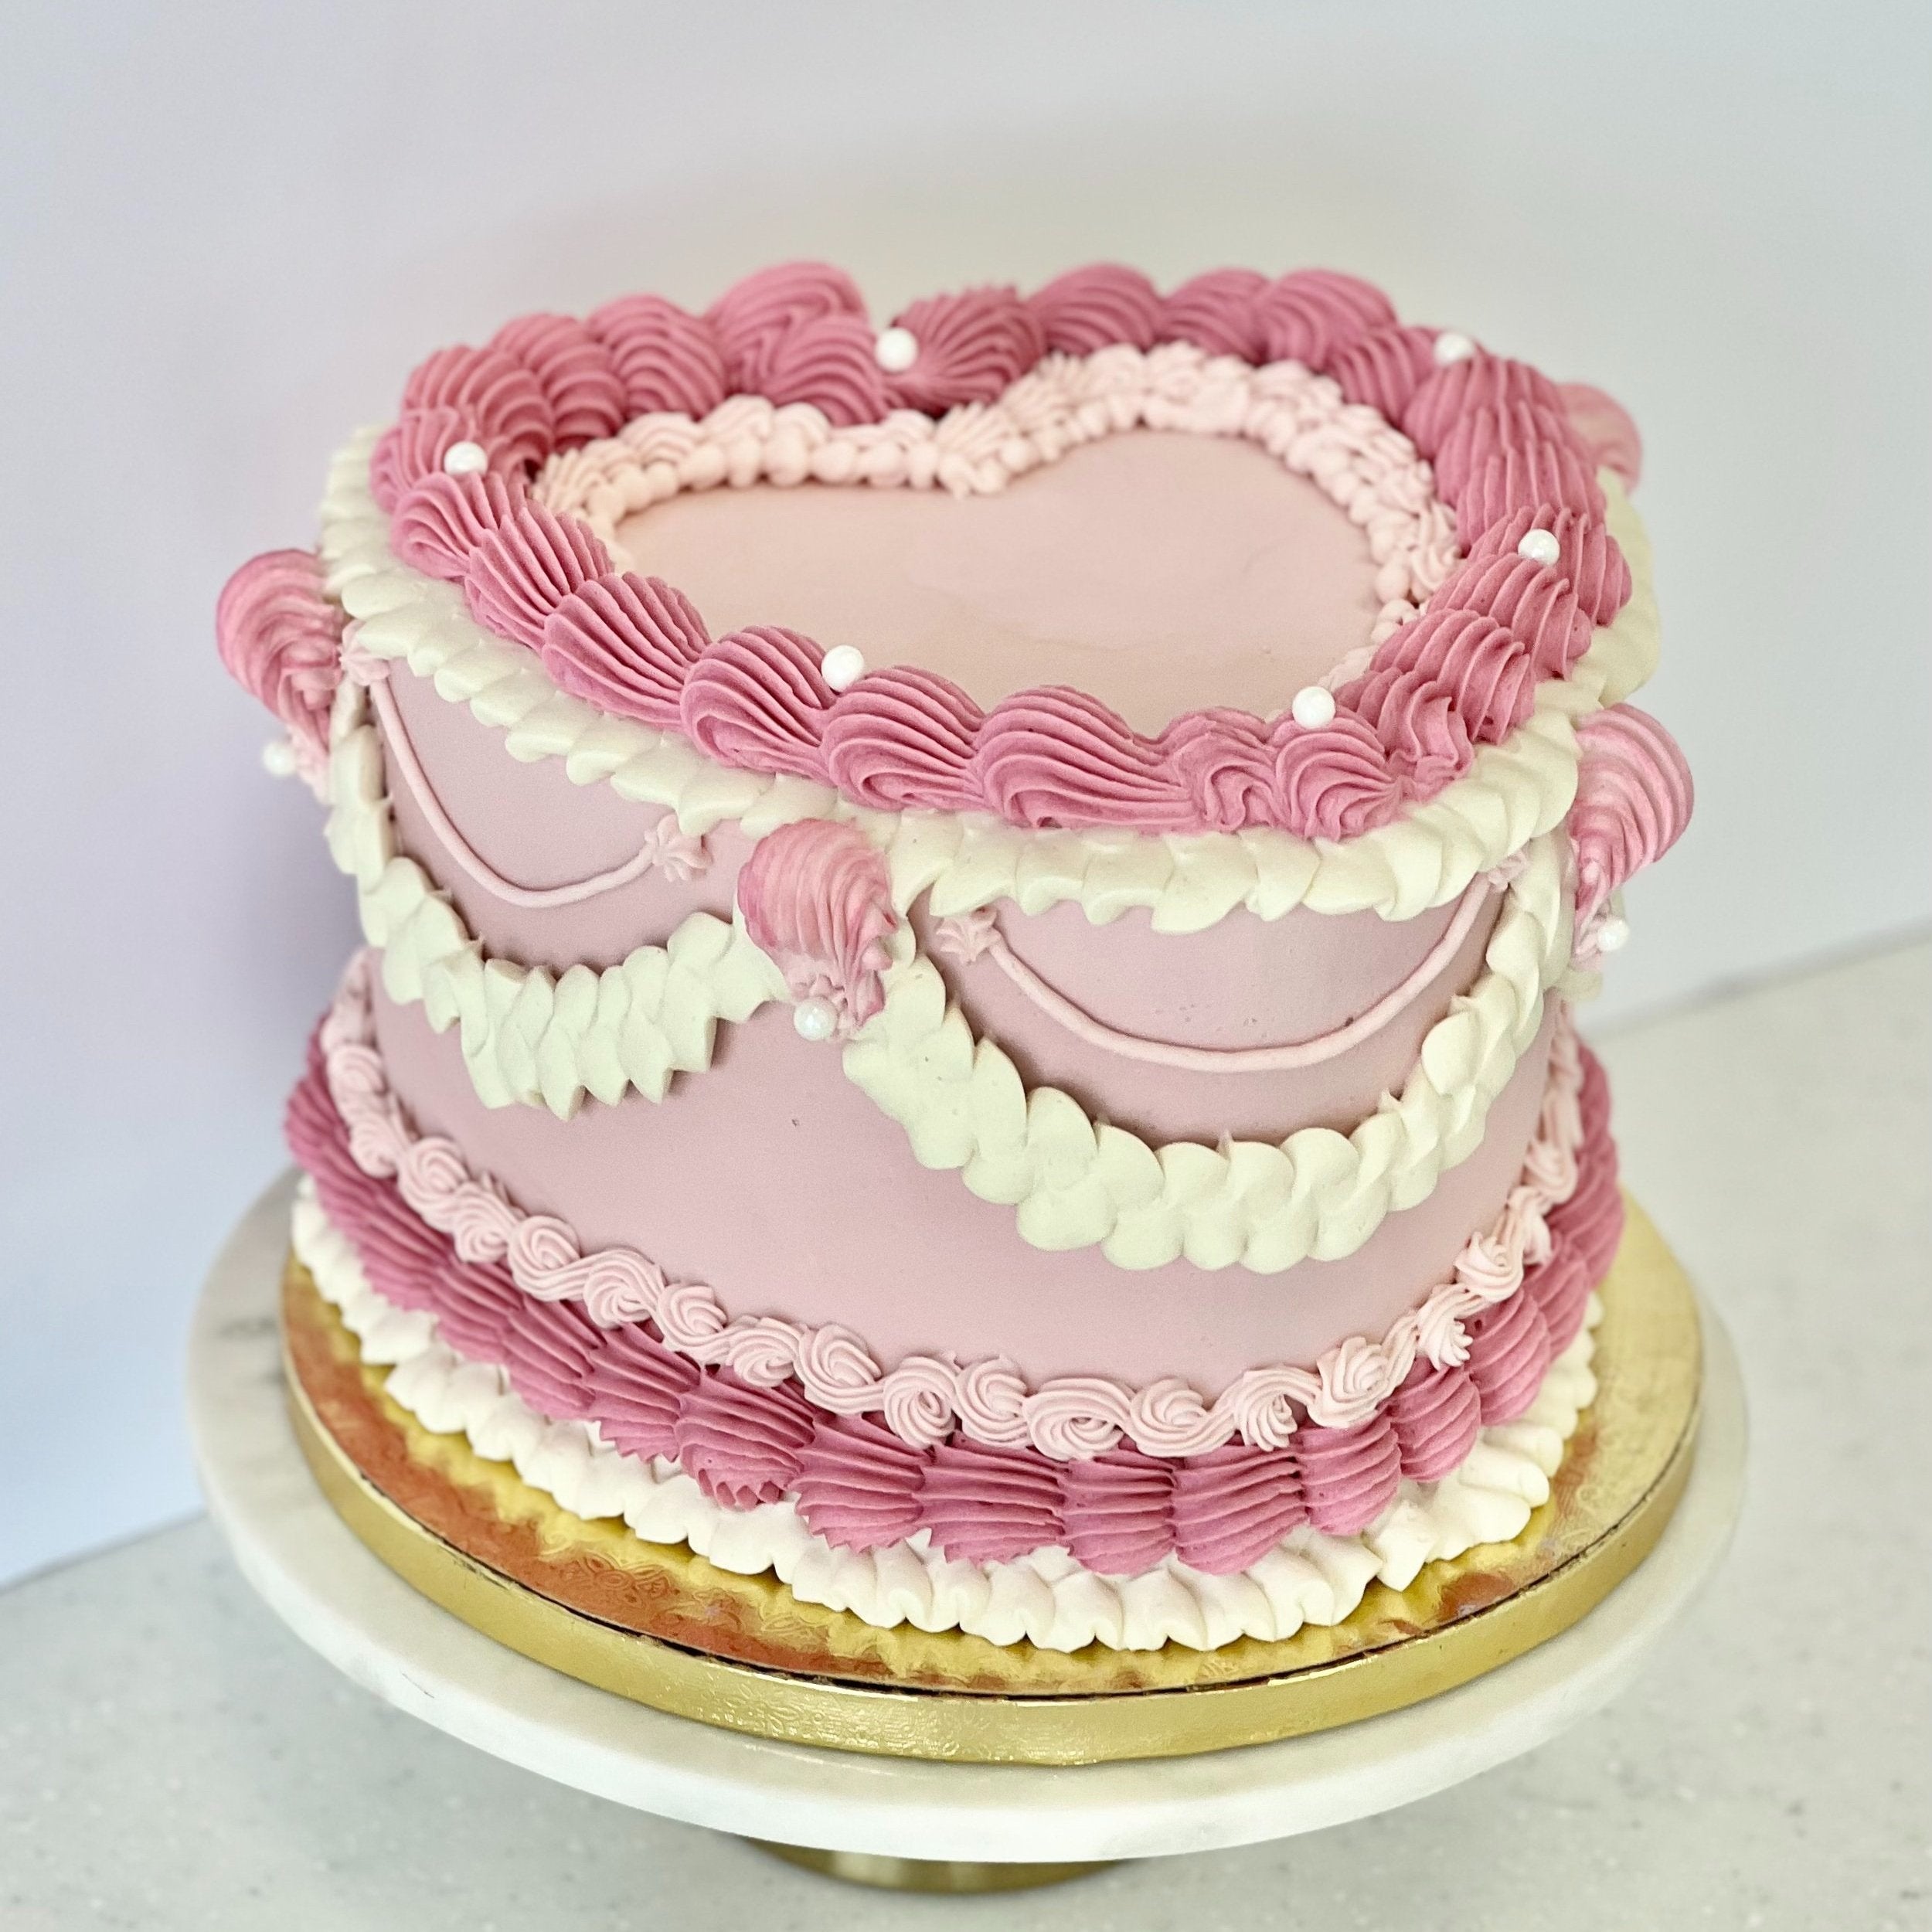 Vintage Tiered Cake Tutorial | LoveCrafts